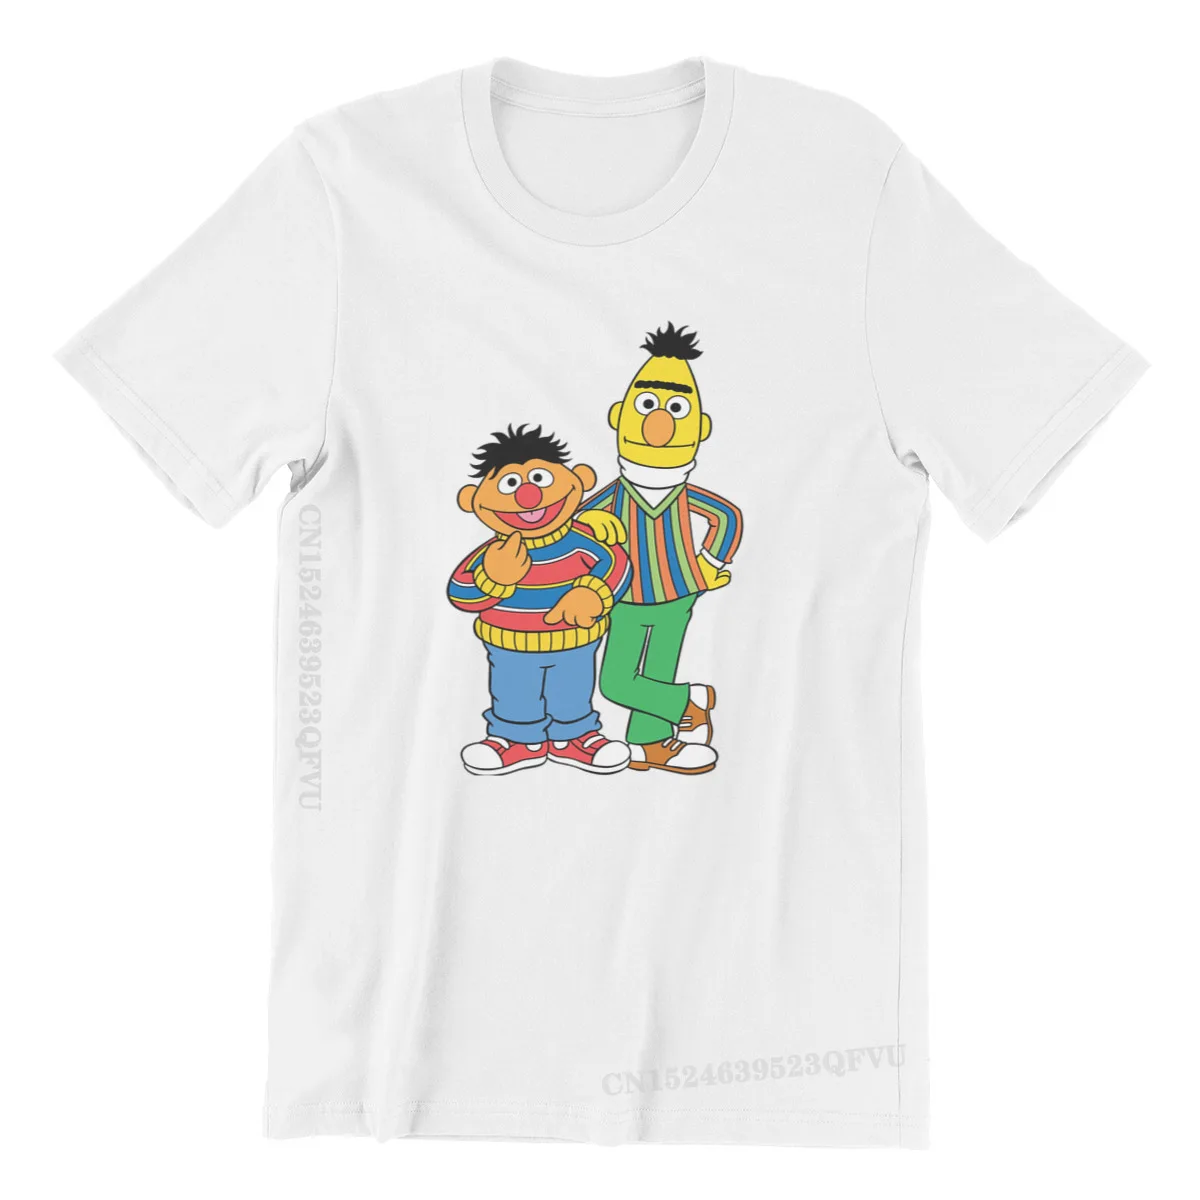 

Sesame Street 80s TV Series Friends Tshirts Top Graphic Men Classic Grunge Camisas Men Clothing Cotton Harajuku T Shirt